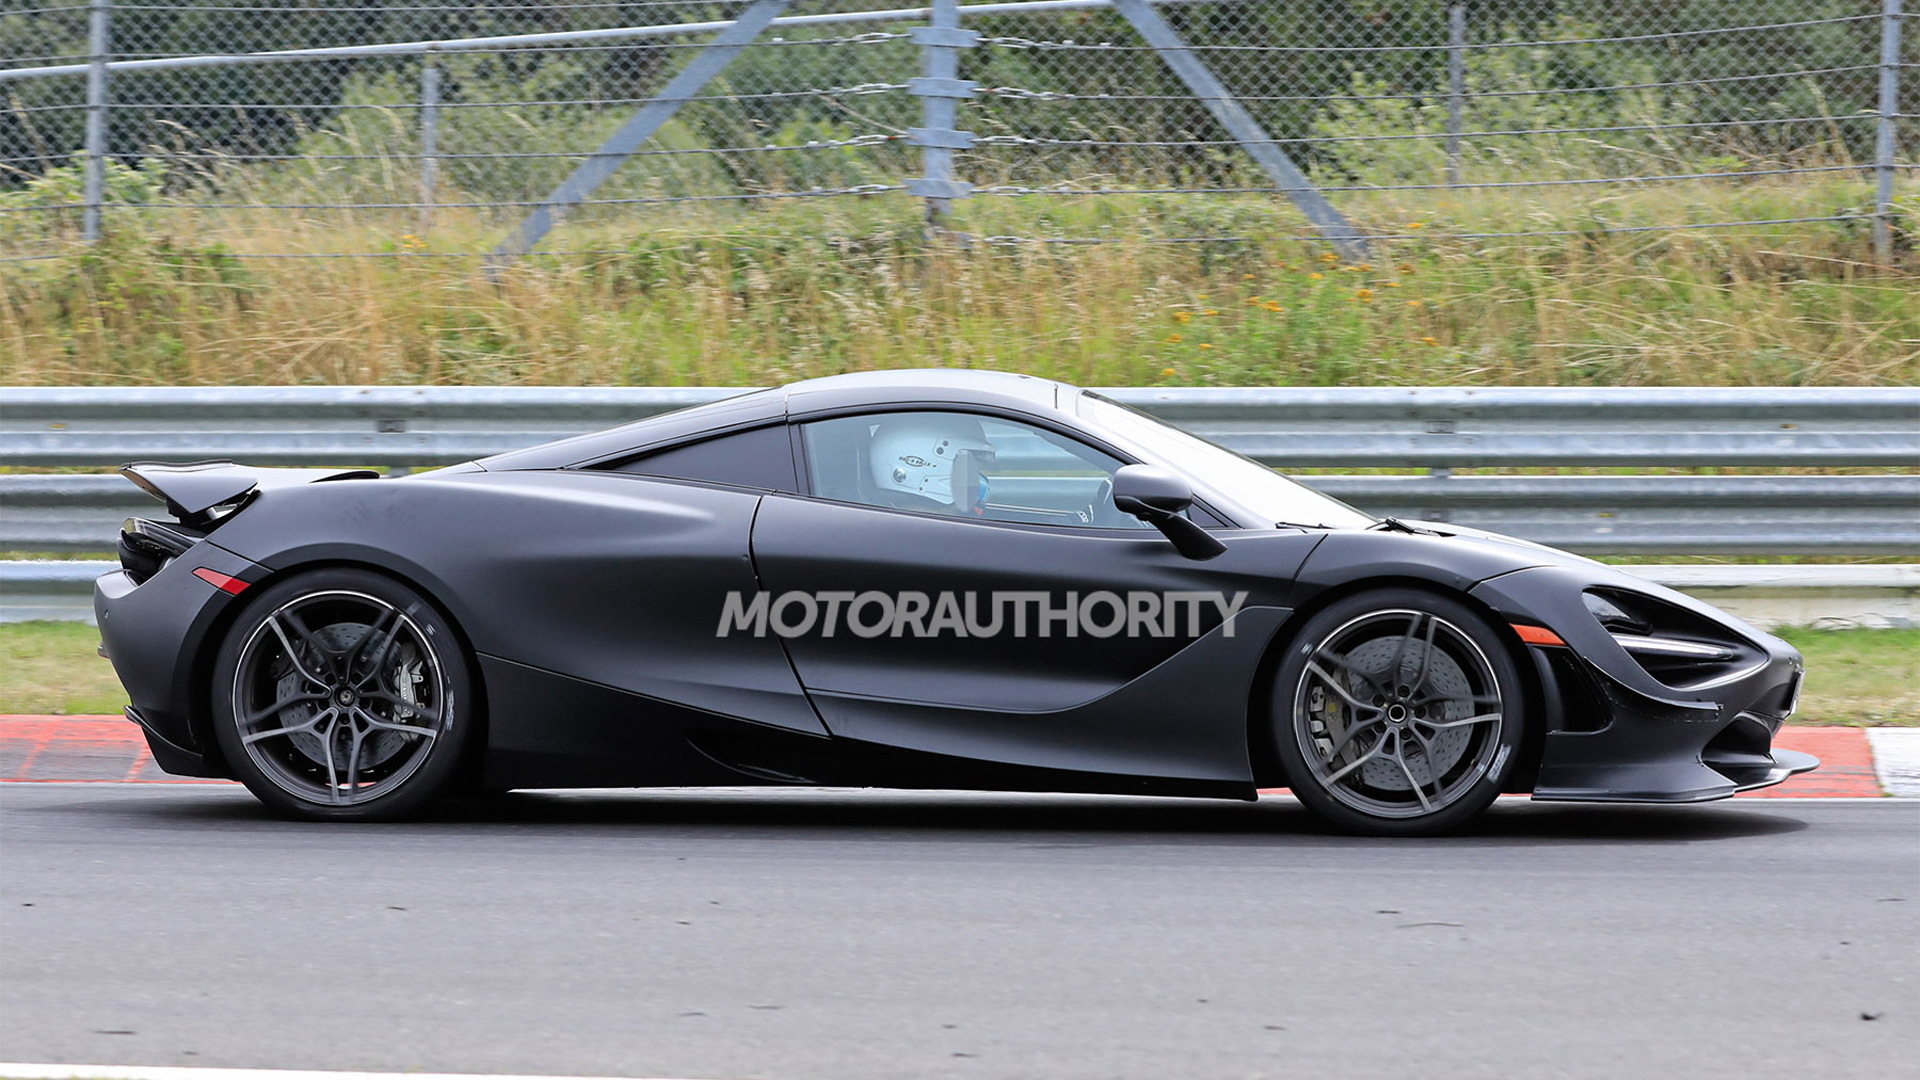 2021 McLaren 750LT test mule spy shots - Photo credit: S. Baldauf/SB-Medien